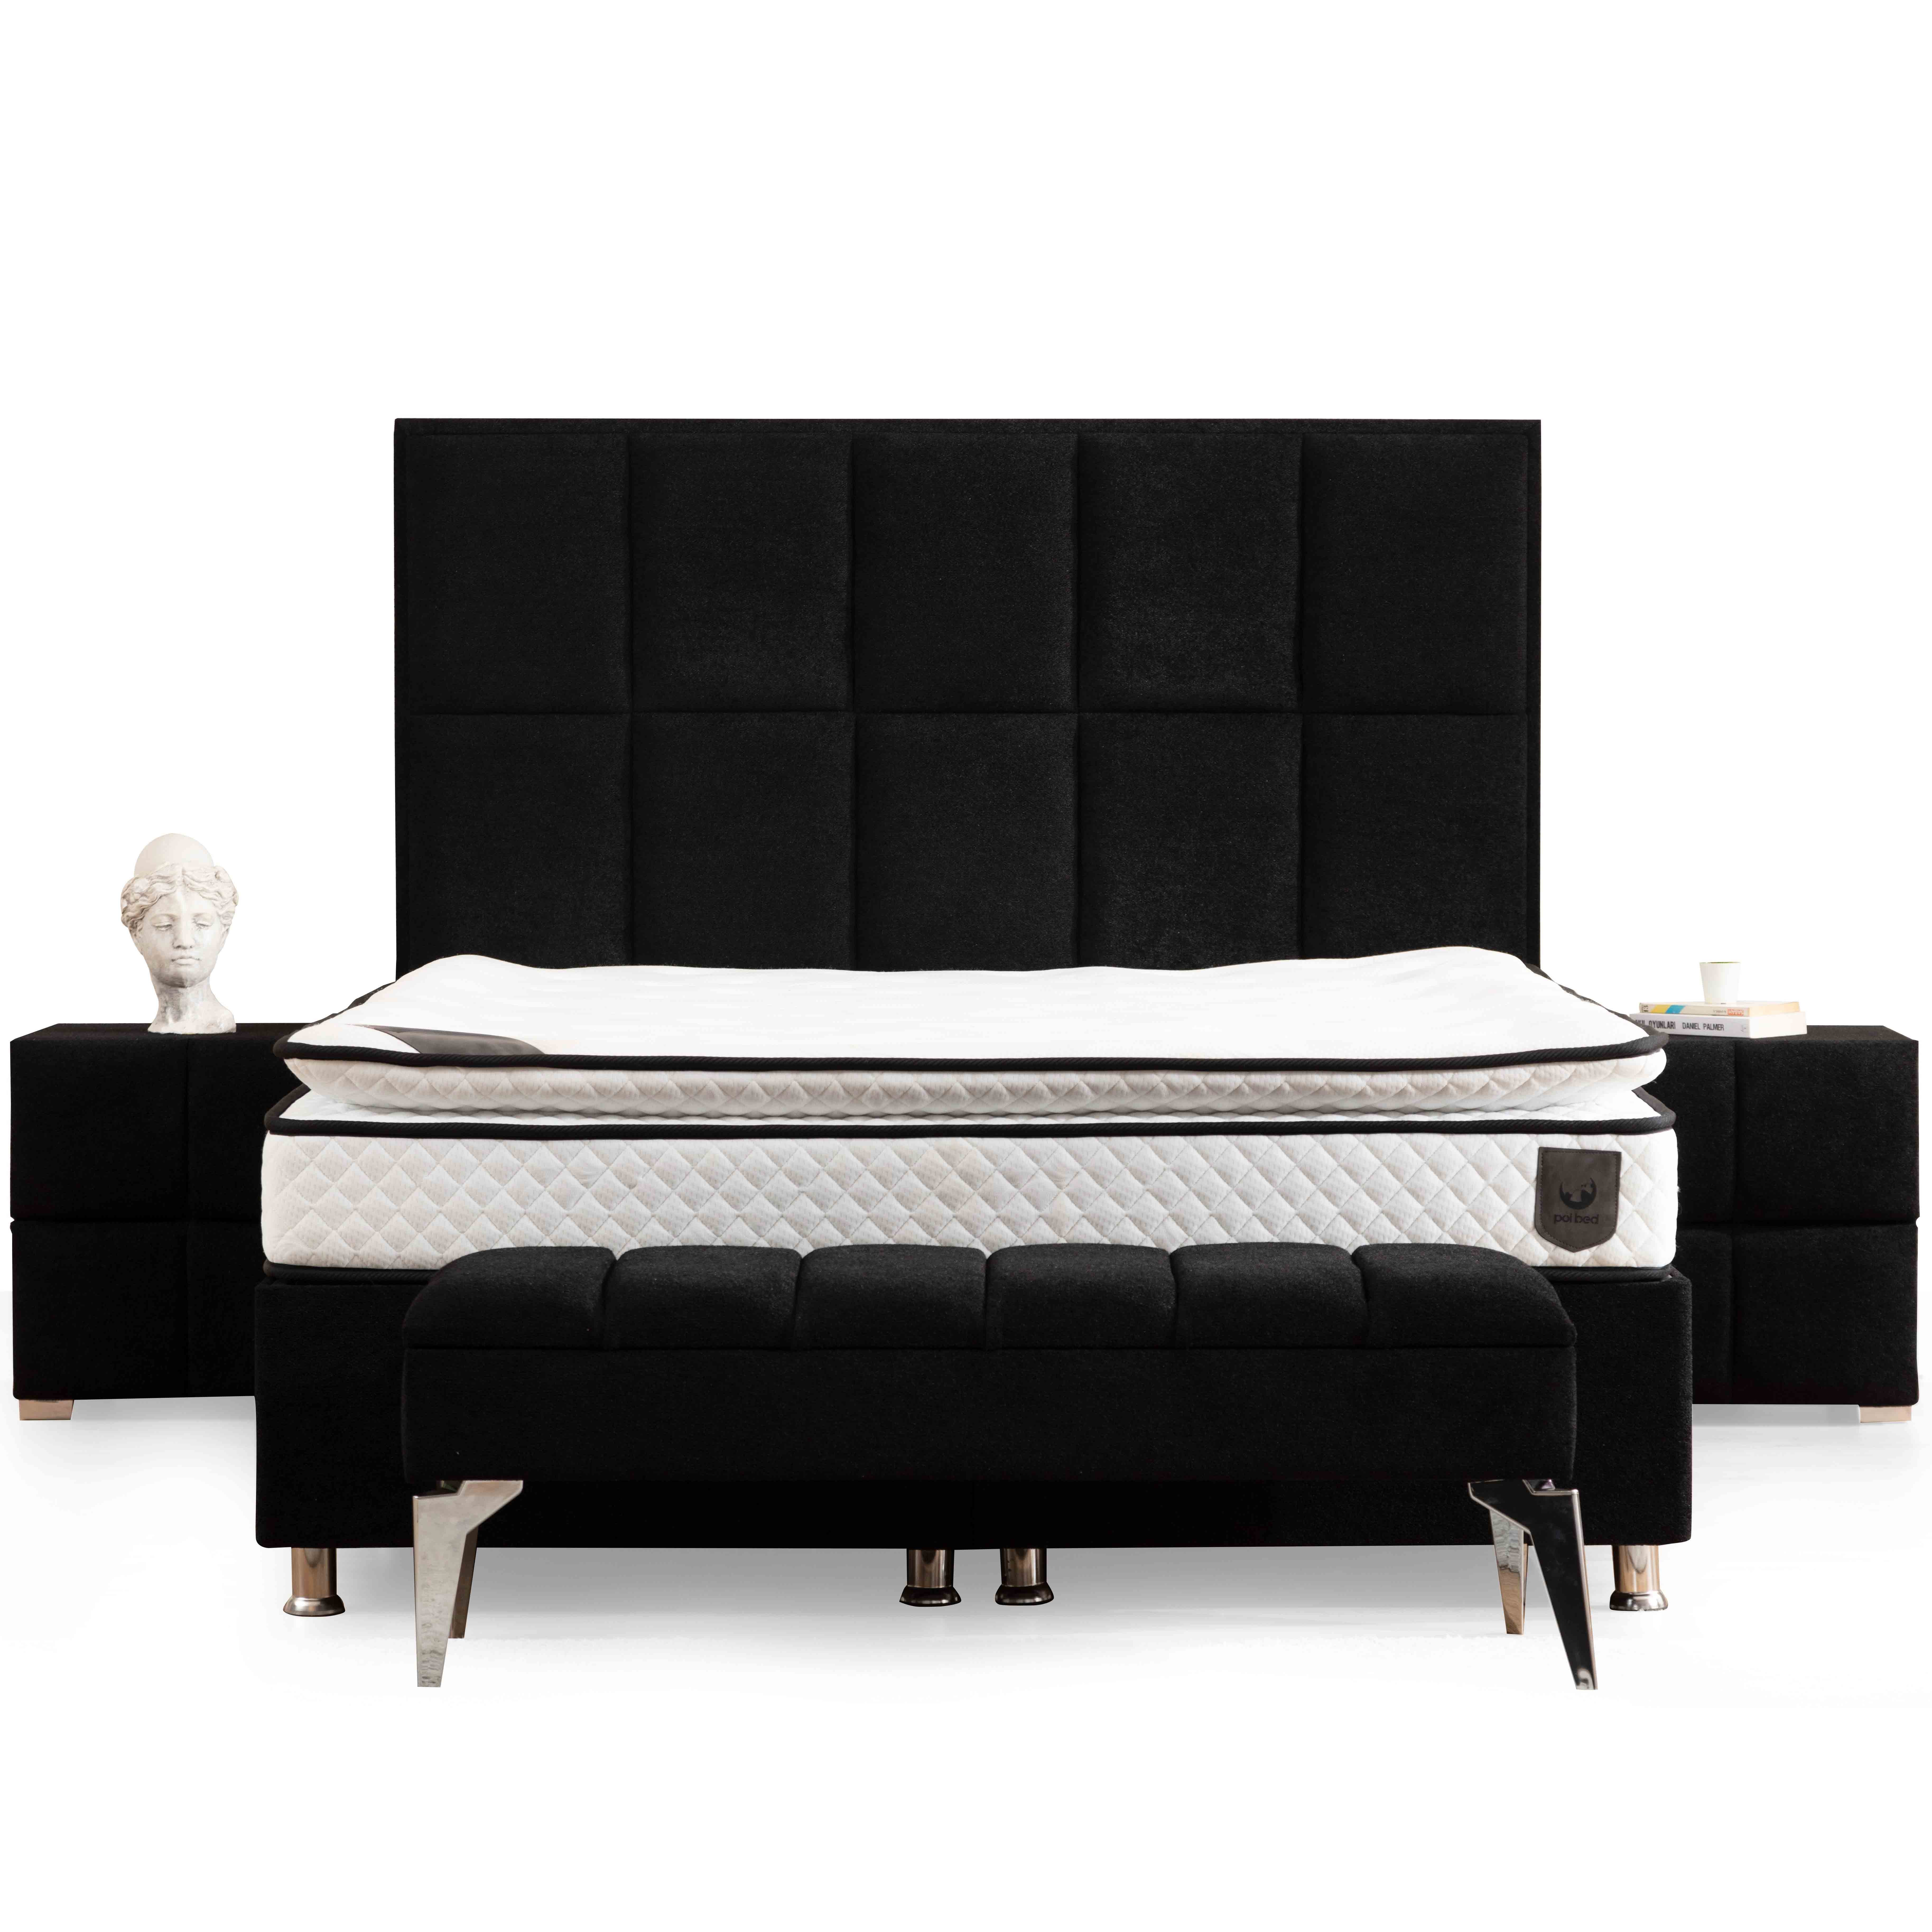 Lovita Bed With Storage 140x190 cm